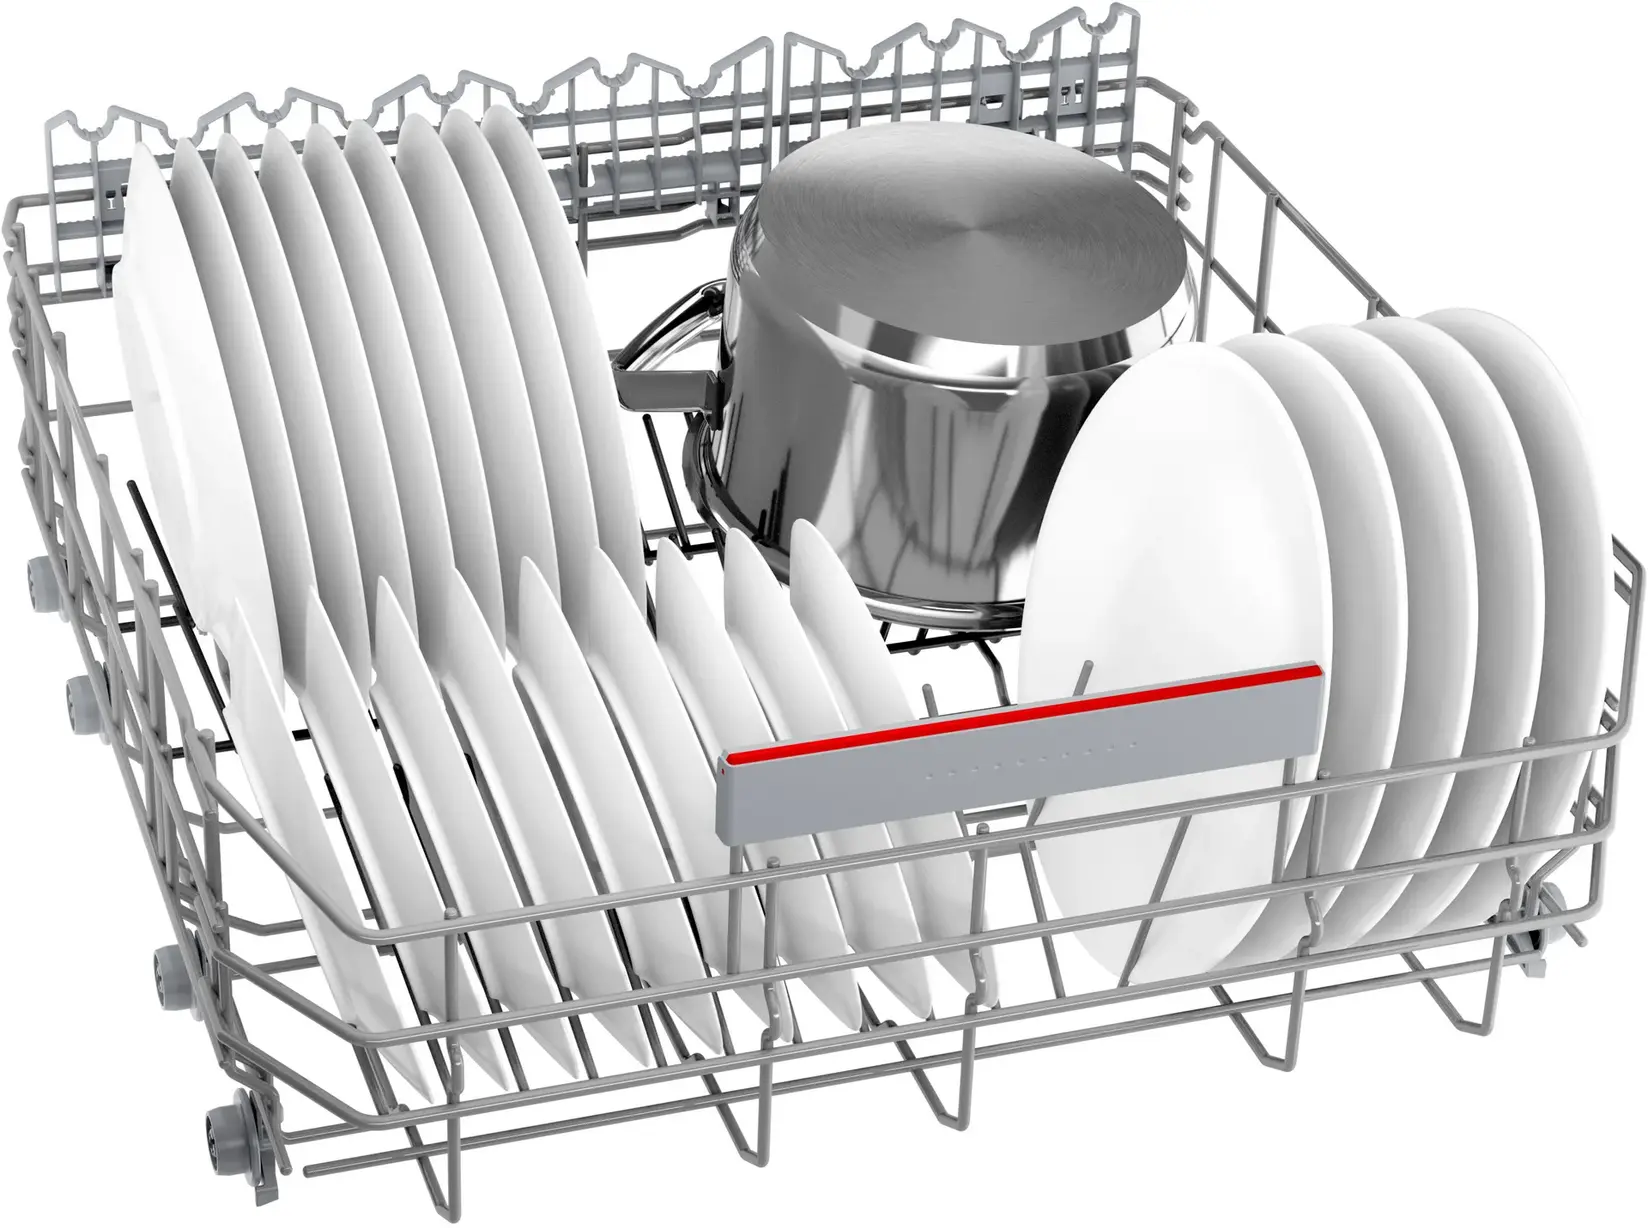 Selected image for BOSCH Ugradna mašina za pranje sudova SMV6YCX02E 60cm bela